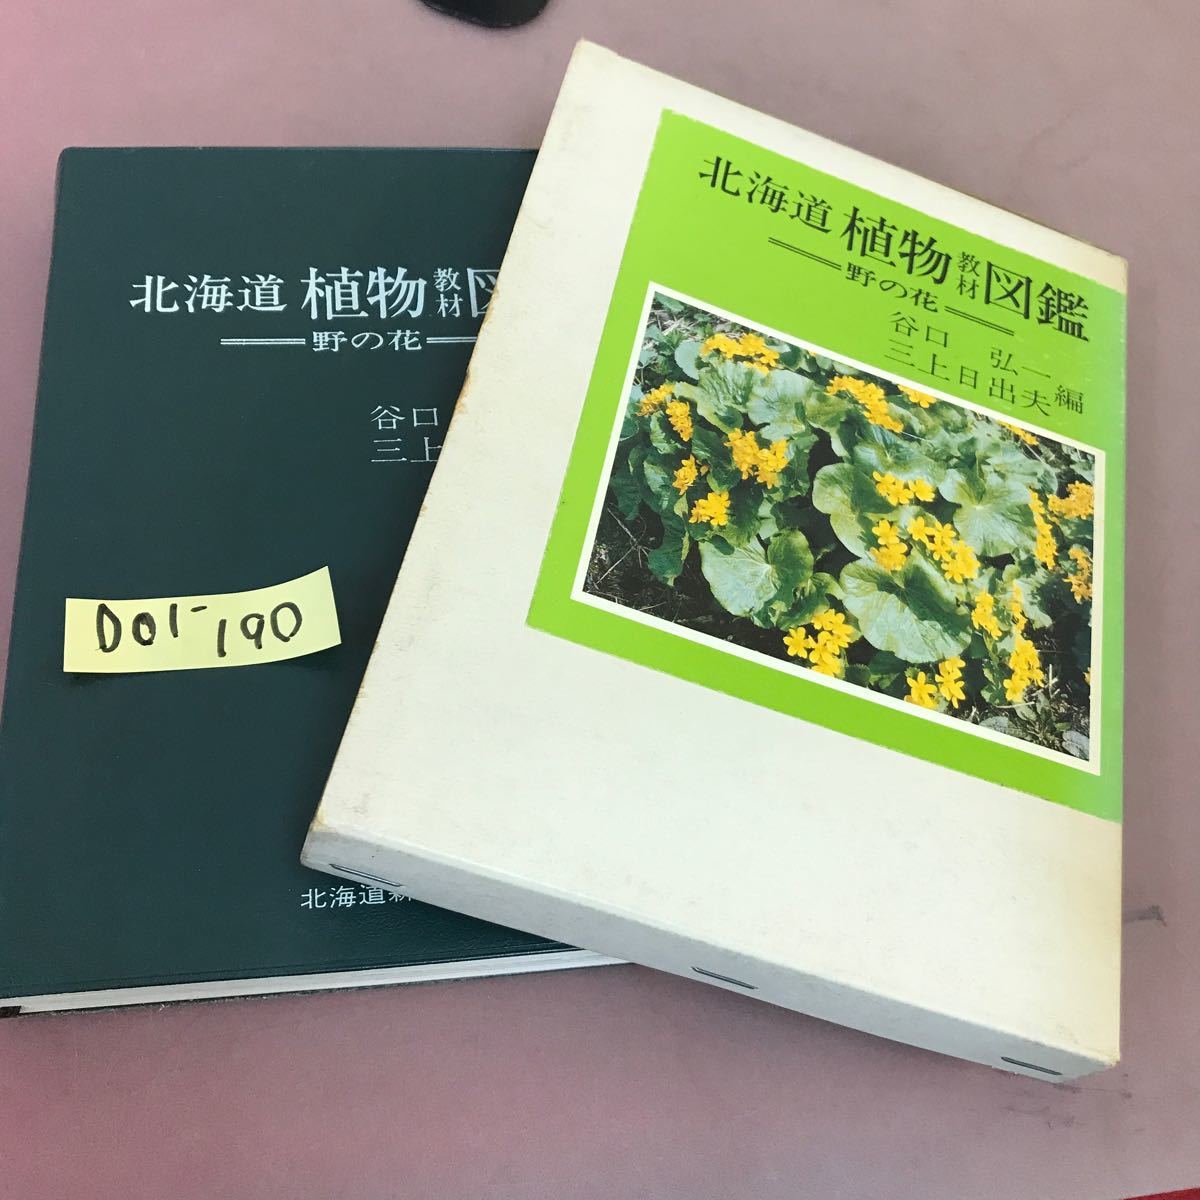 D01-190 北海道植物教材図鑑 野の花 北海道新聞社